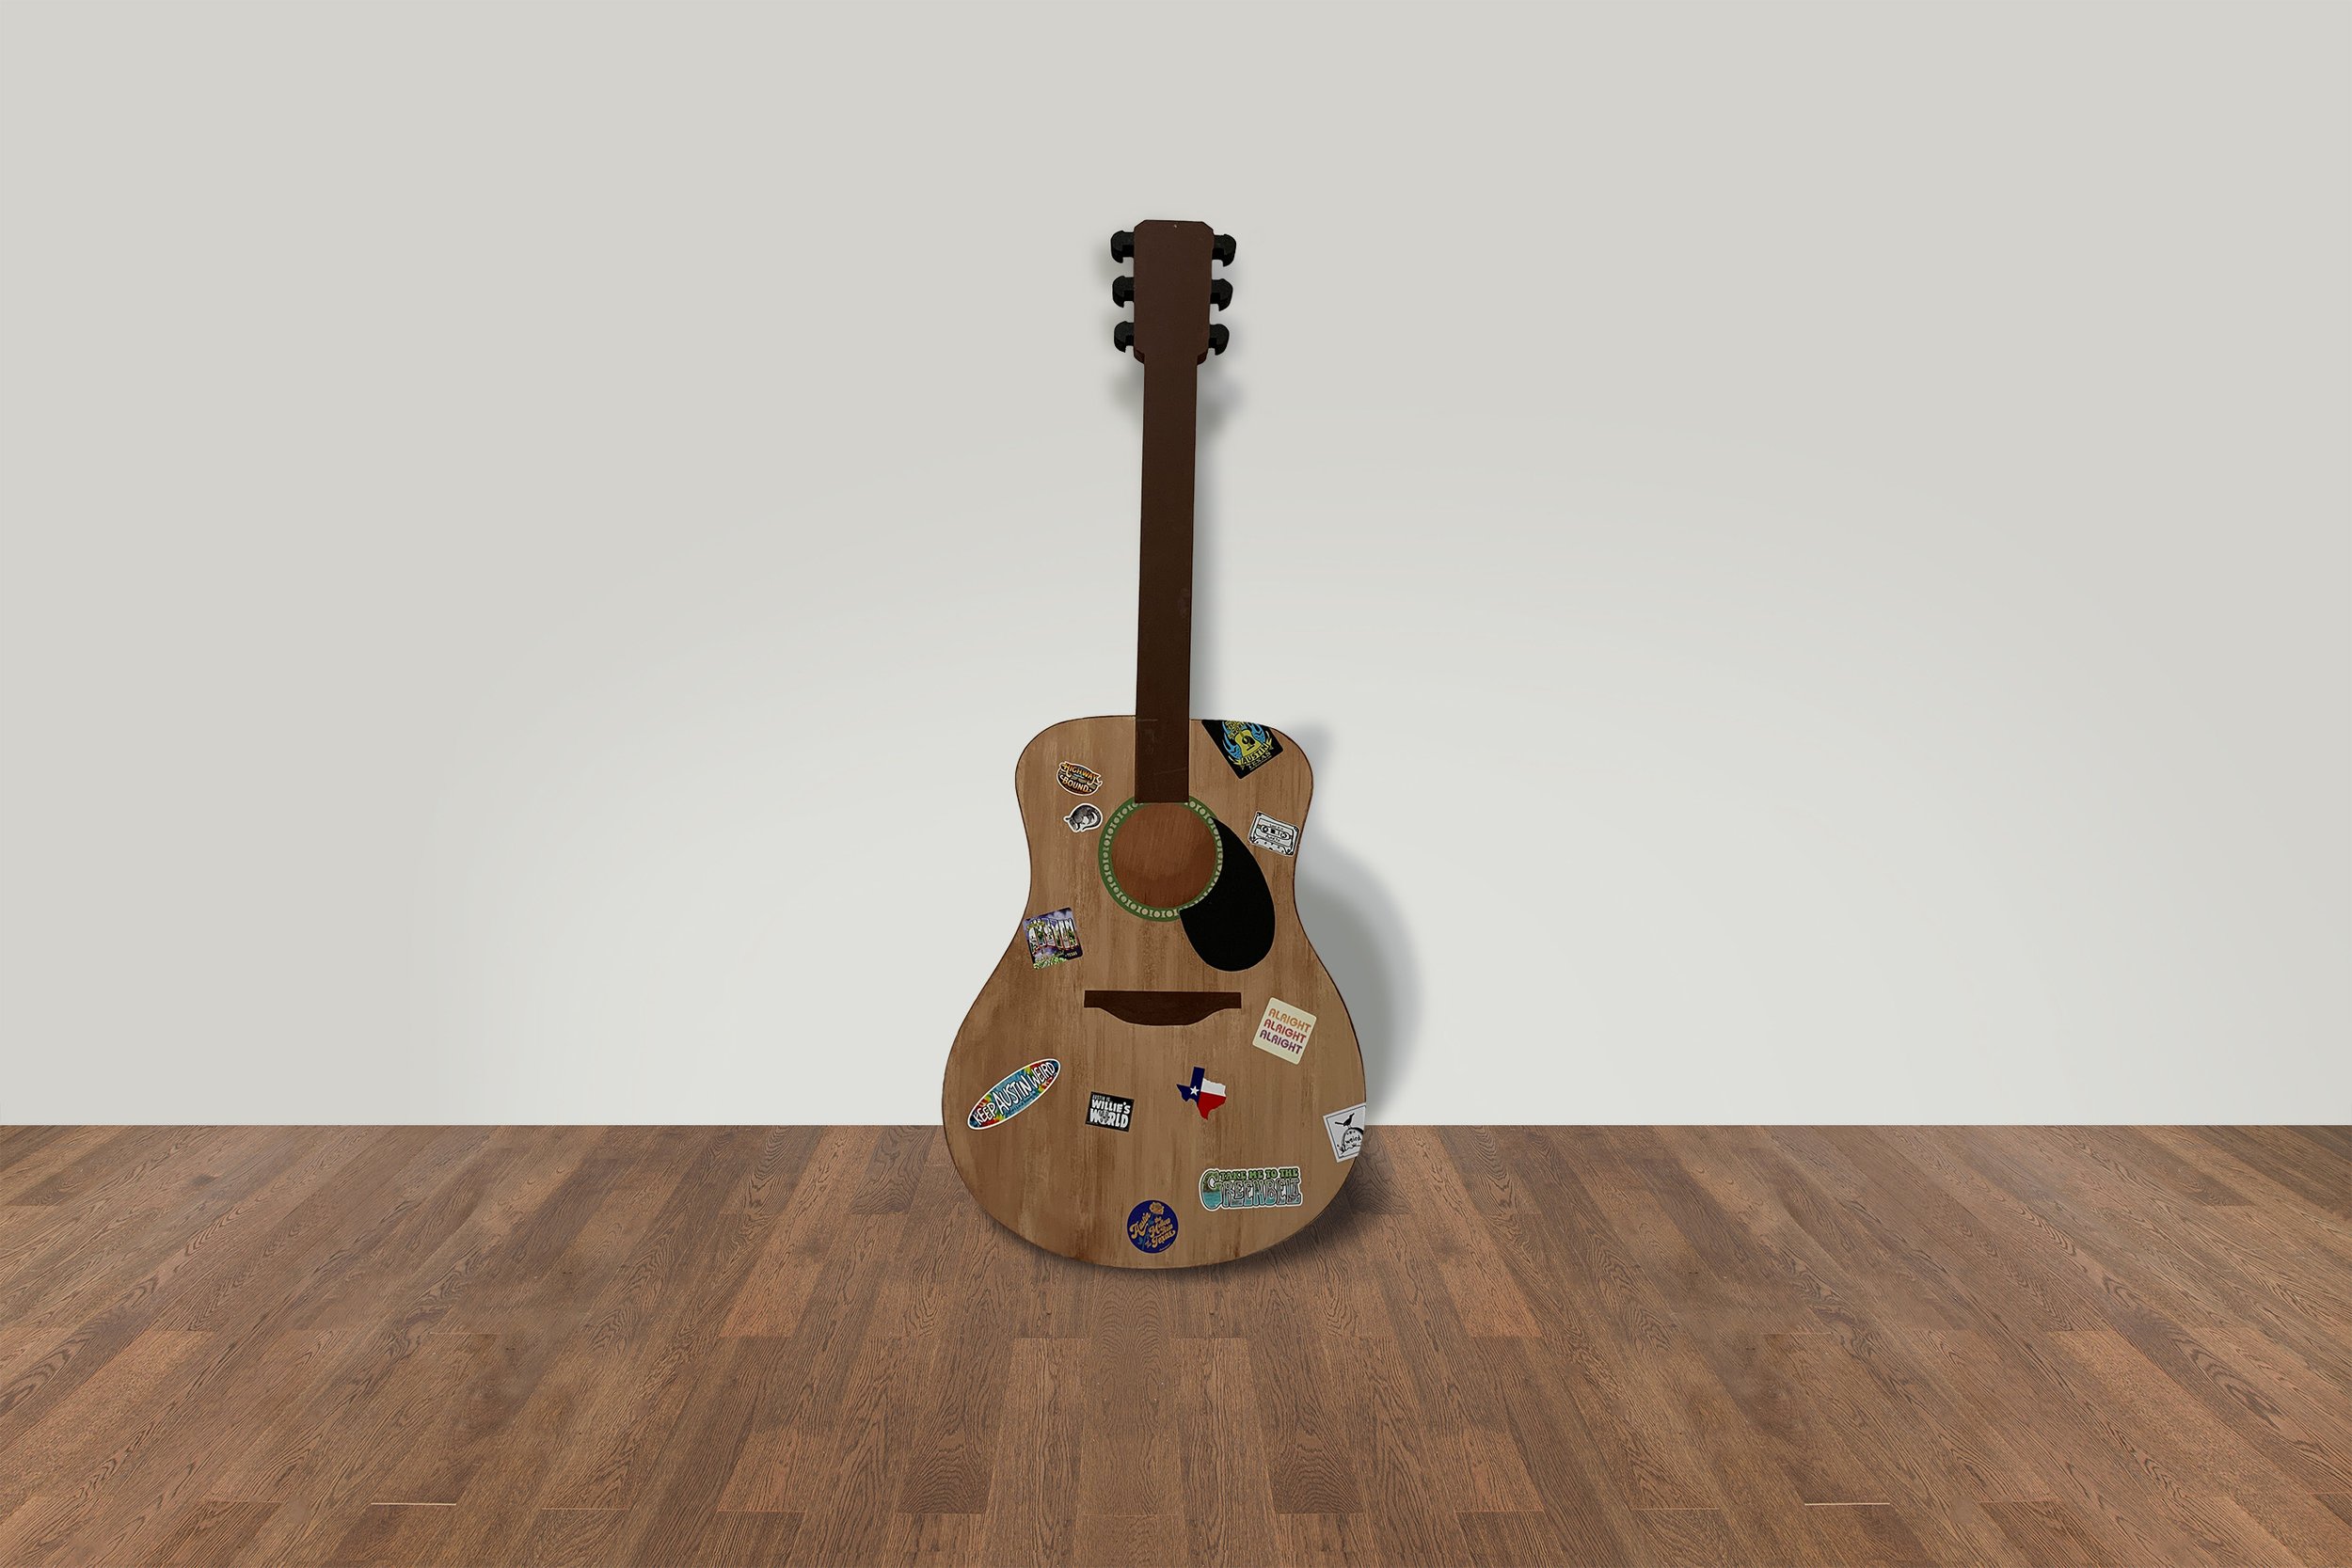 The Sticker Guitar